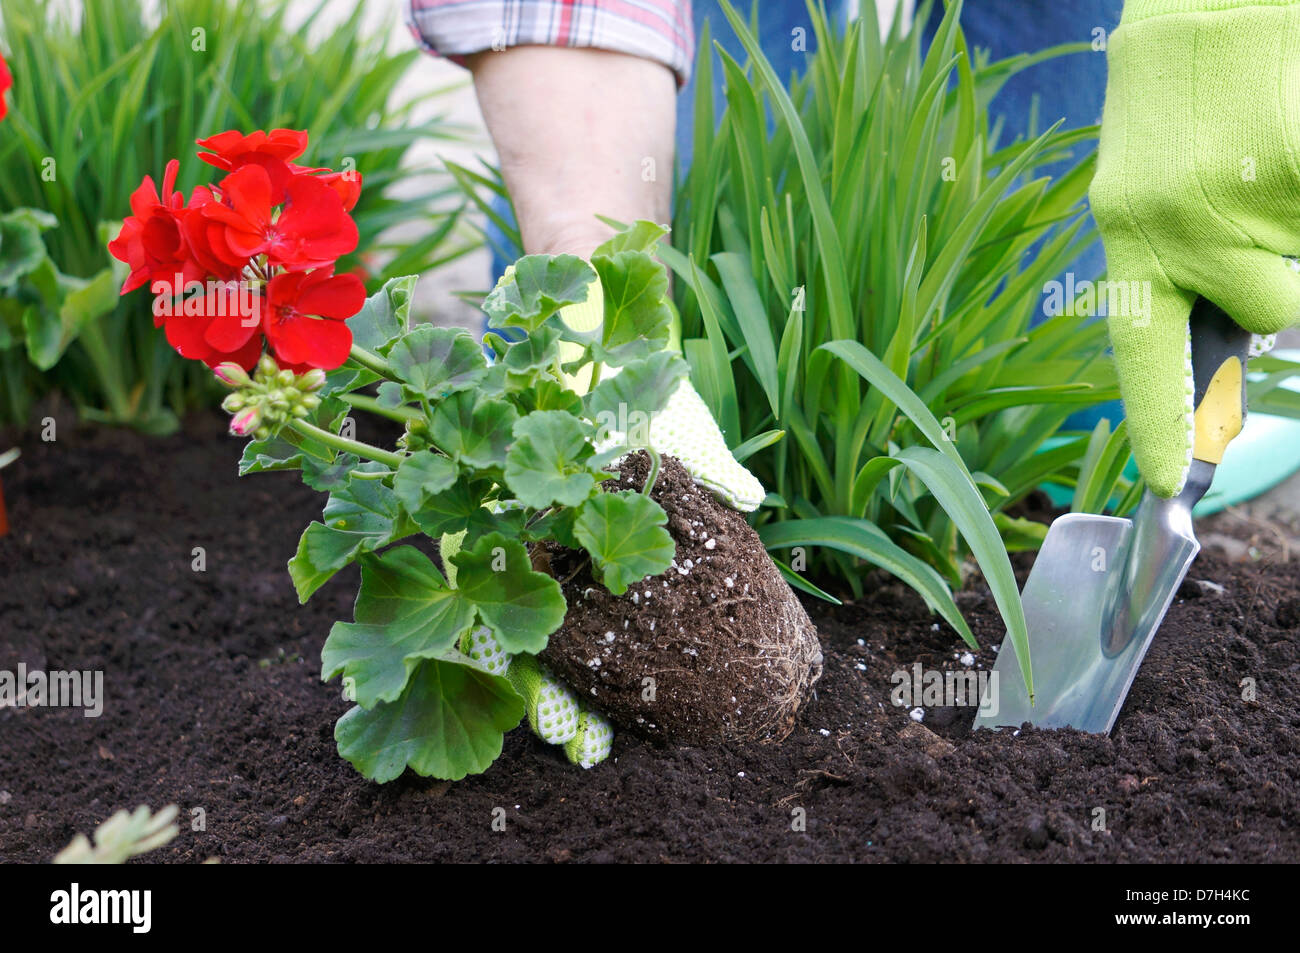 Gardening, Planting Flowers, Red Geranium Stock Photo